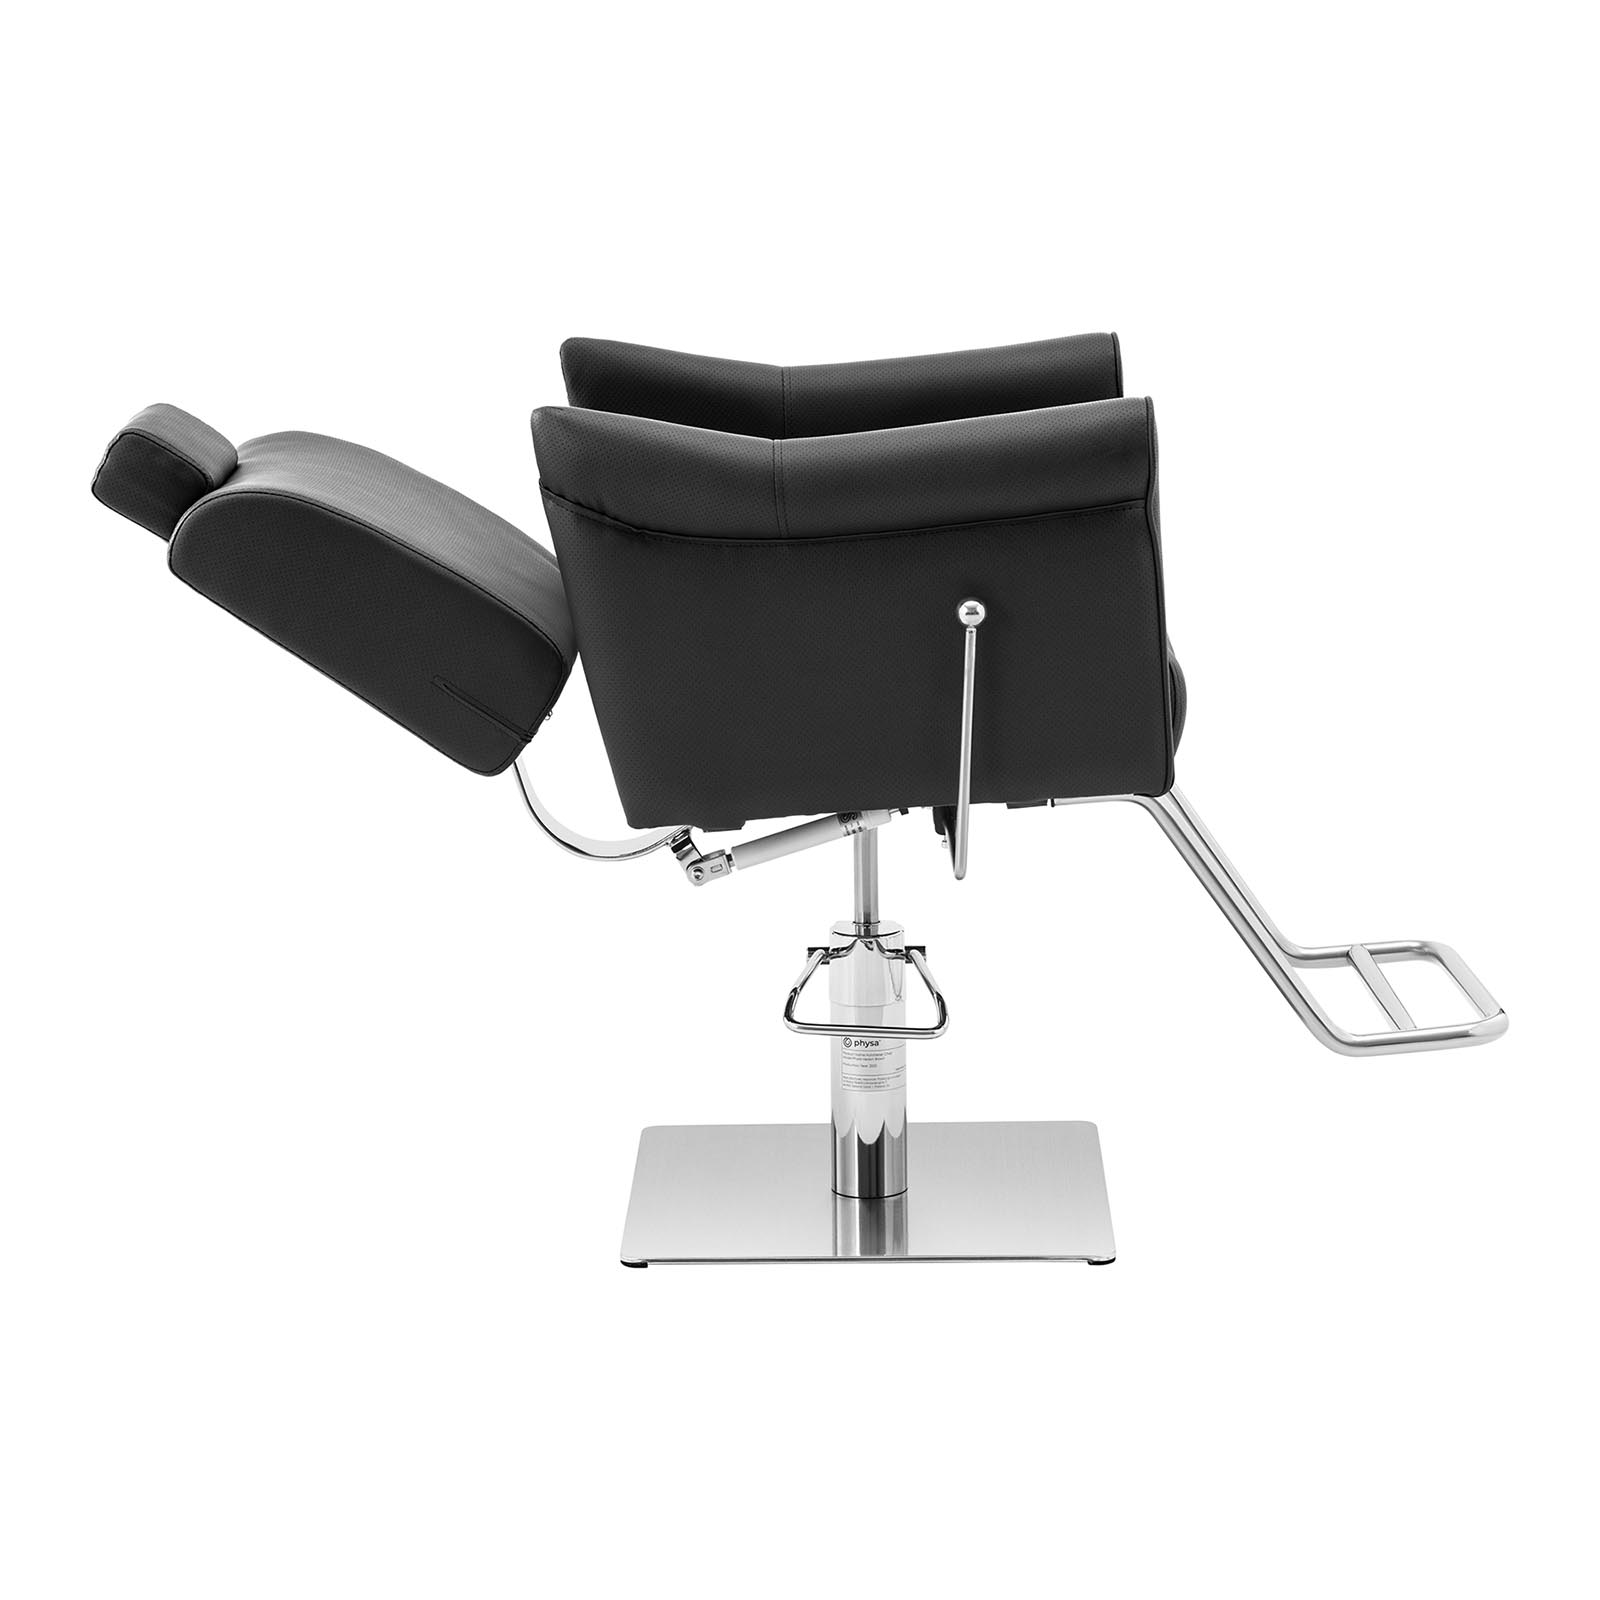 Fotel fryzjerski z podnóżkiem - 1020 - 1170 mm - 200 kg - czarny, srebrny